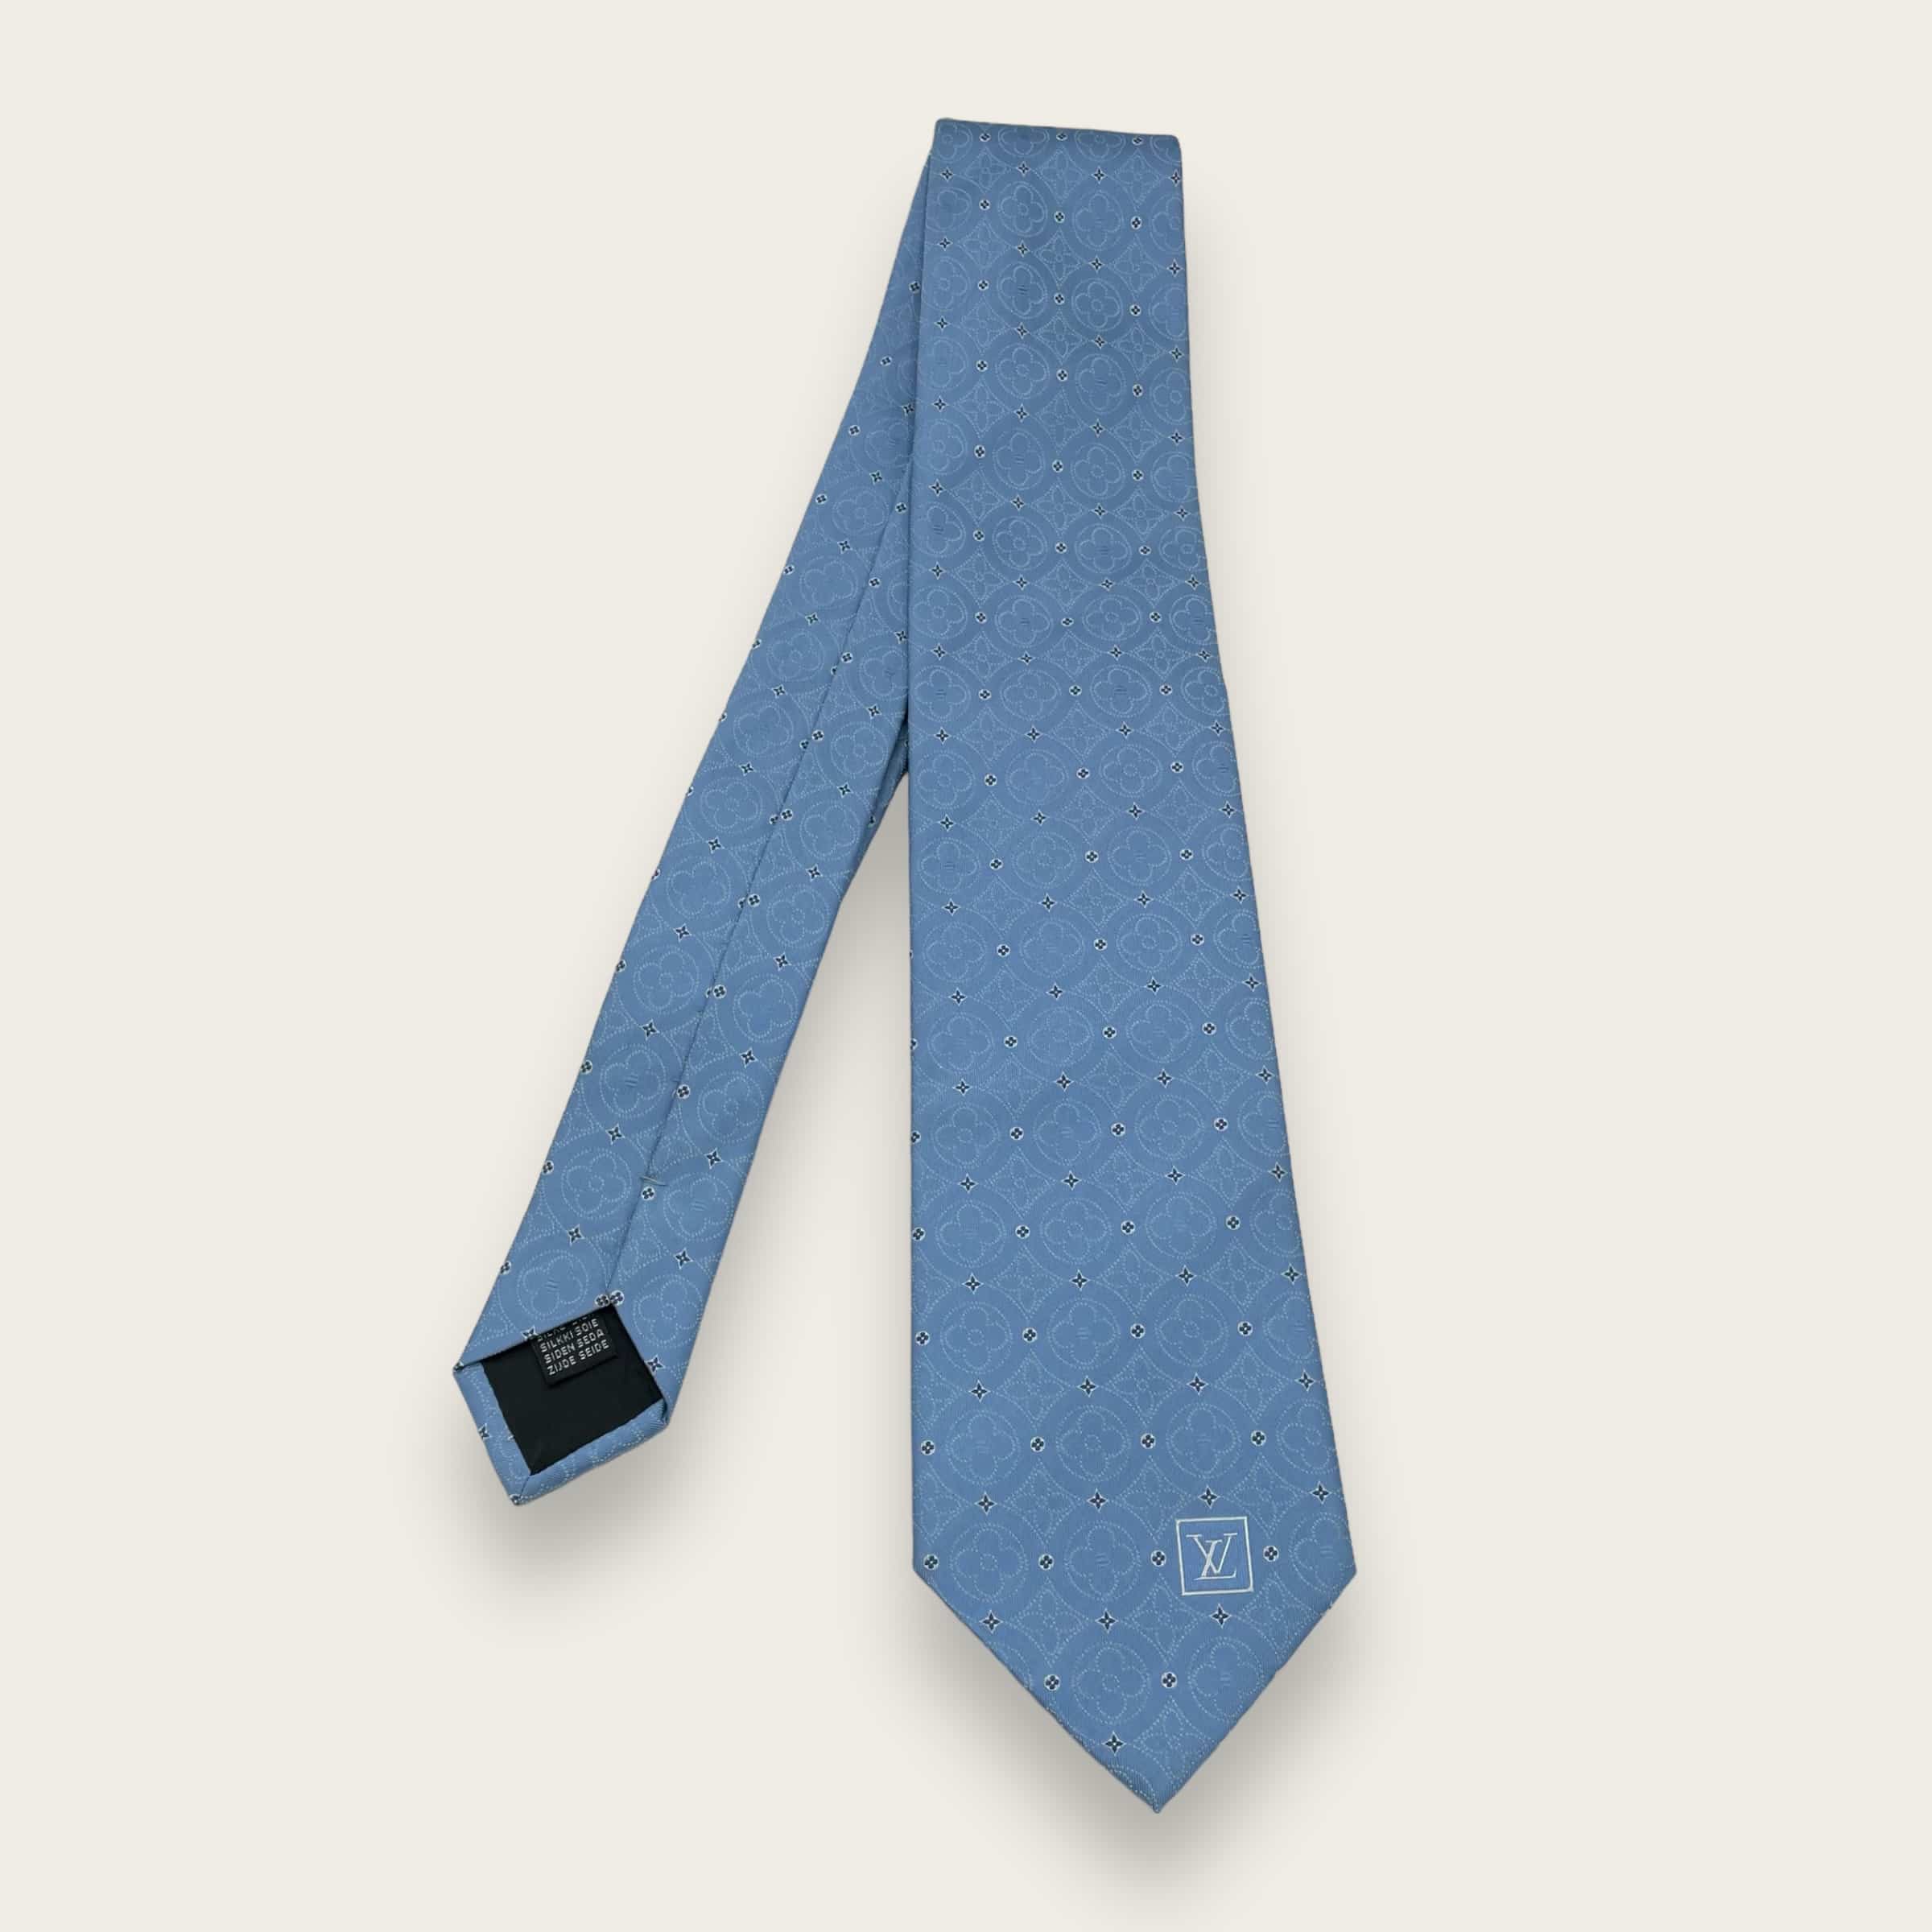 Louis Vuitton cravatta in seta azzurra logo. - La Belle Epoque